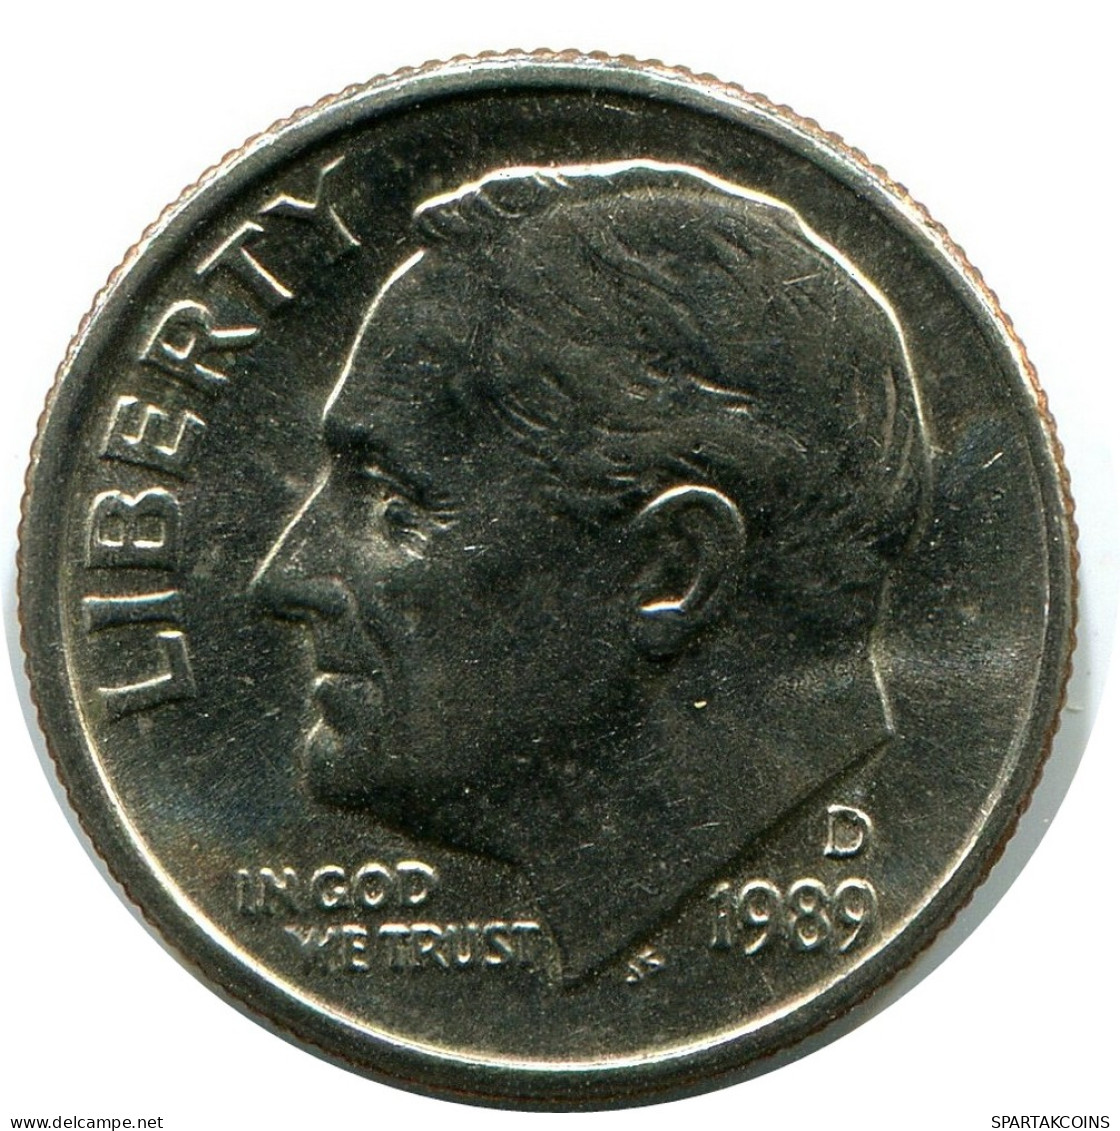 10 CENTS 1989 USA Coin #AZ249.U - 2, 3 & 20 Cent